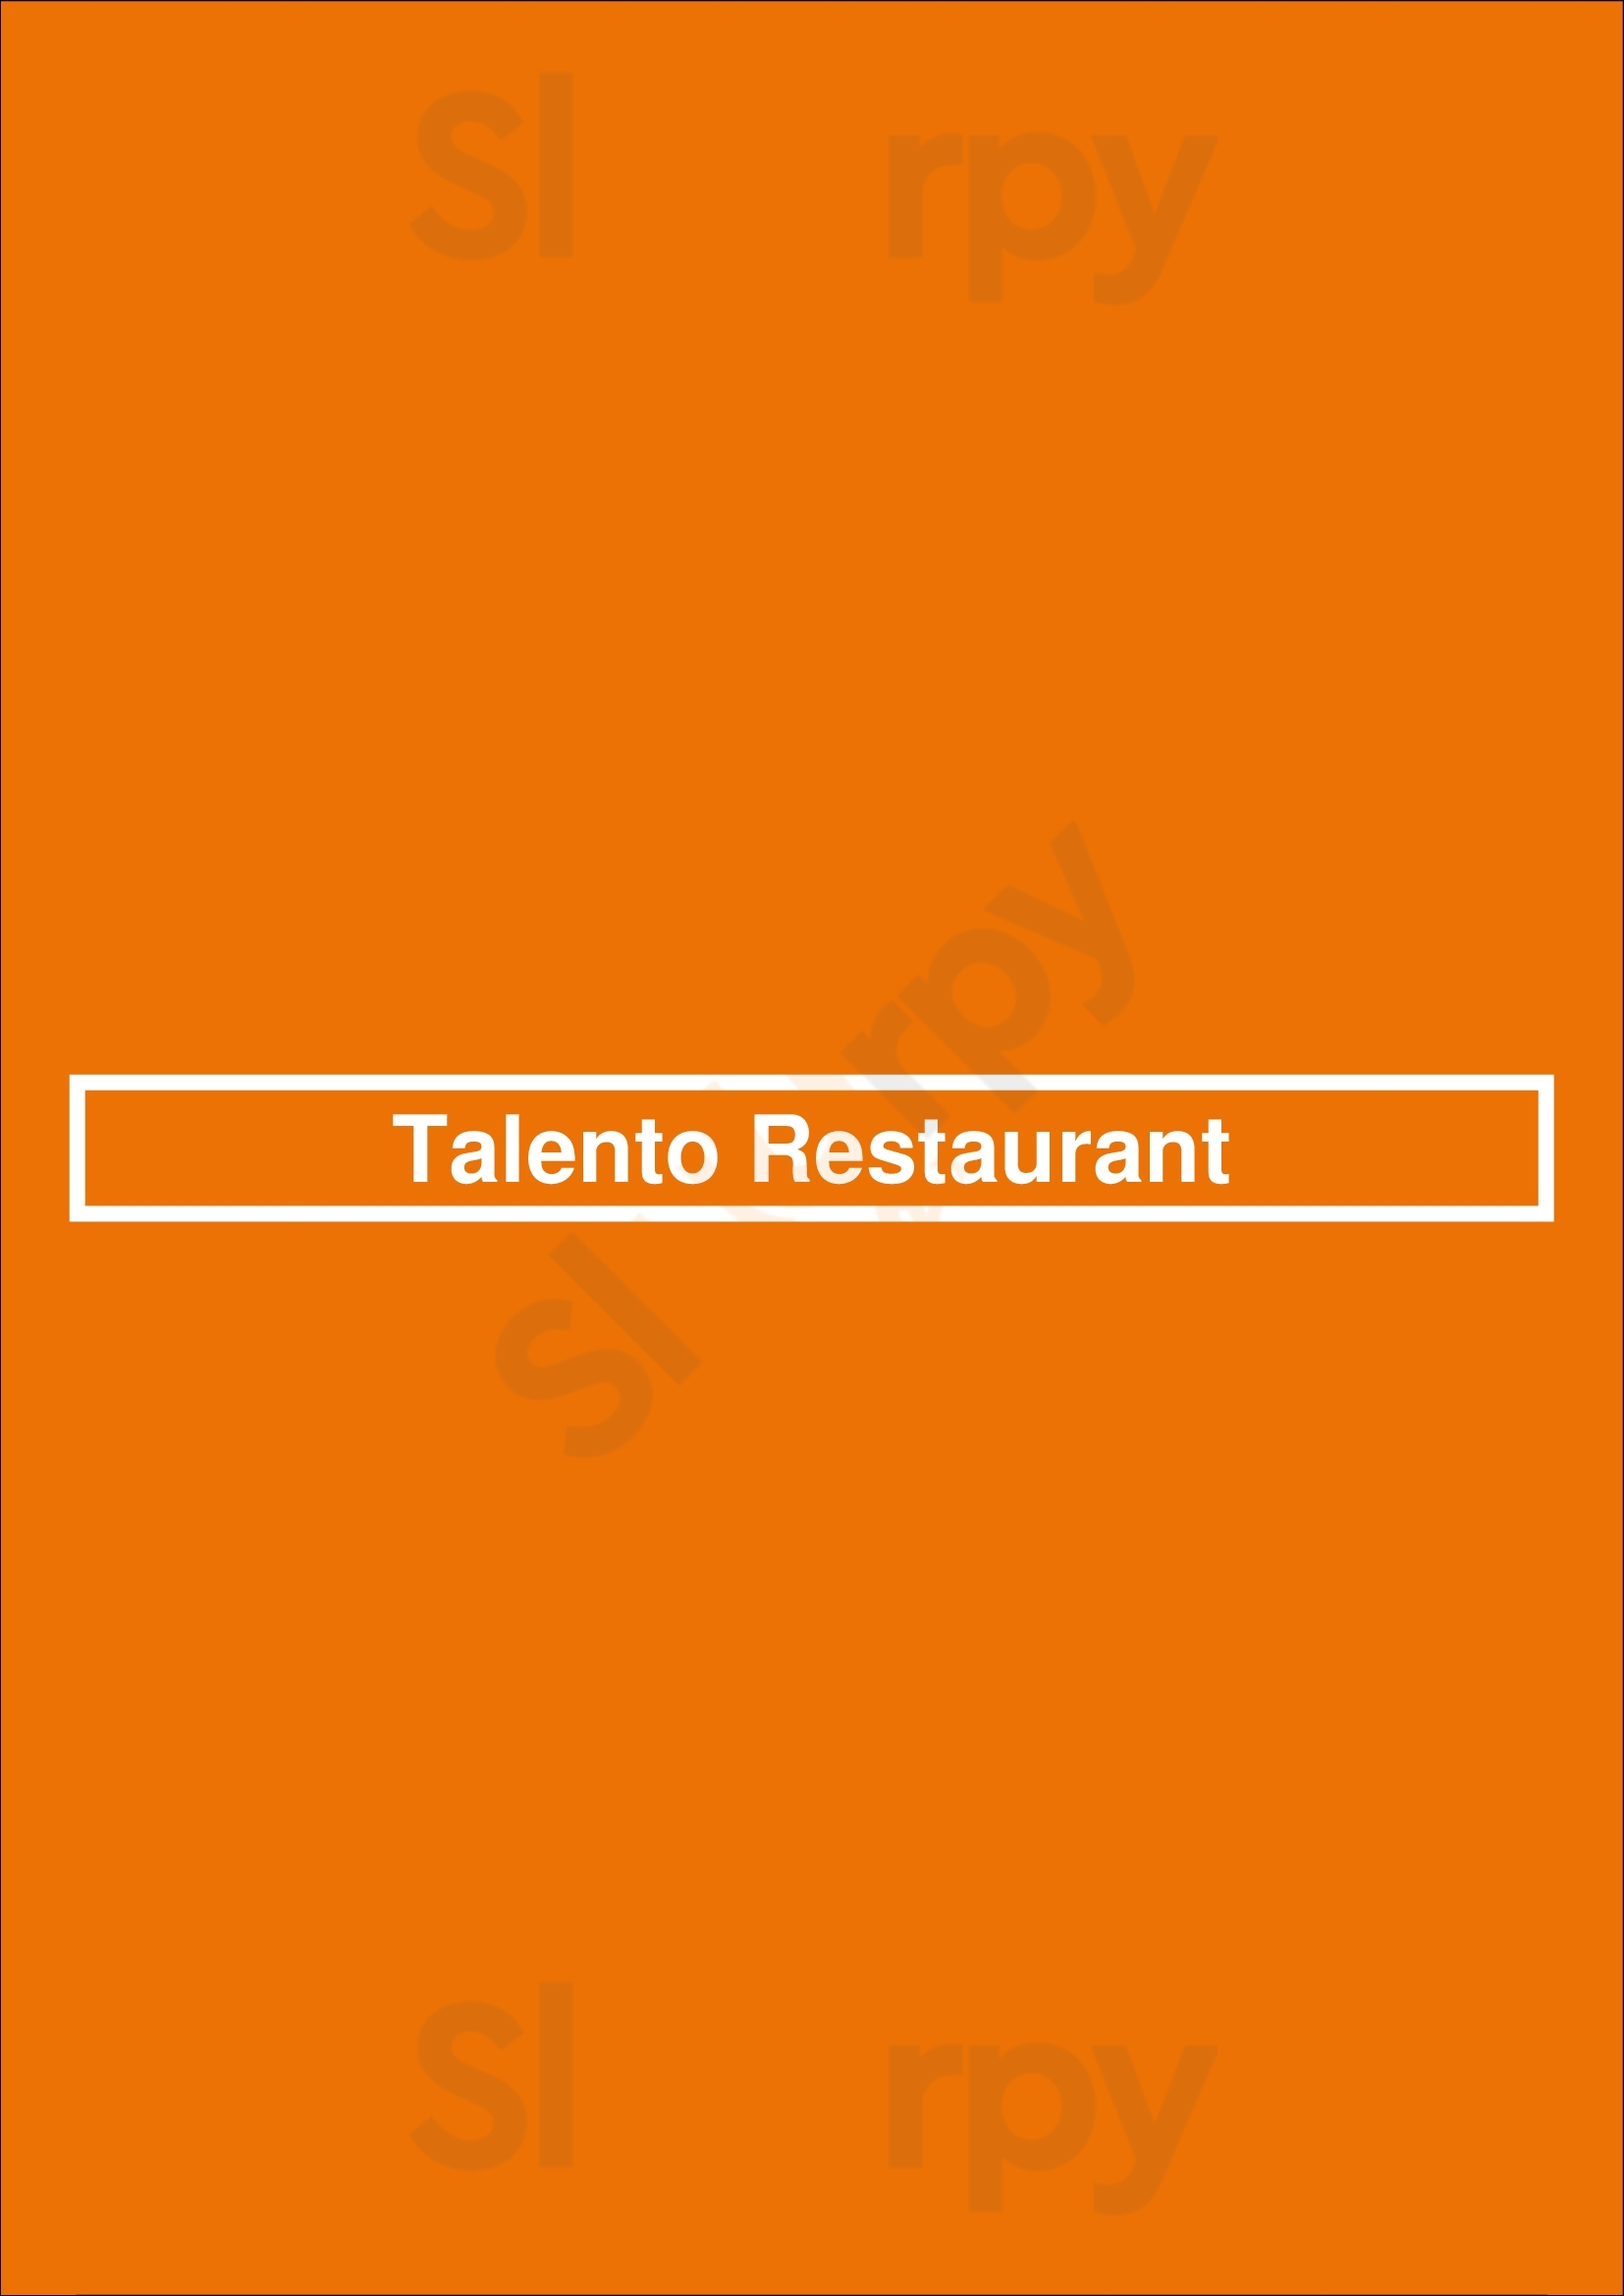 Talento Restaurant Fort Lauderdale Menu - 1